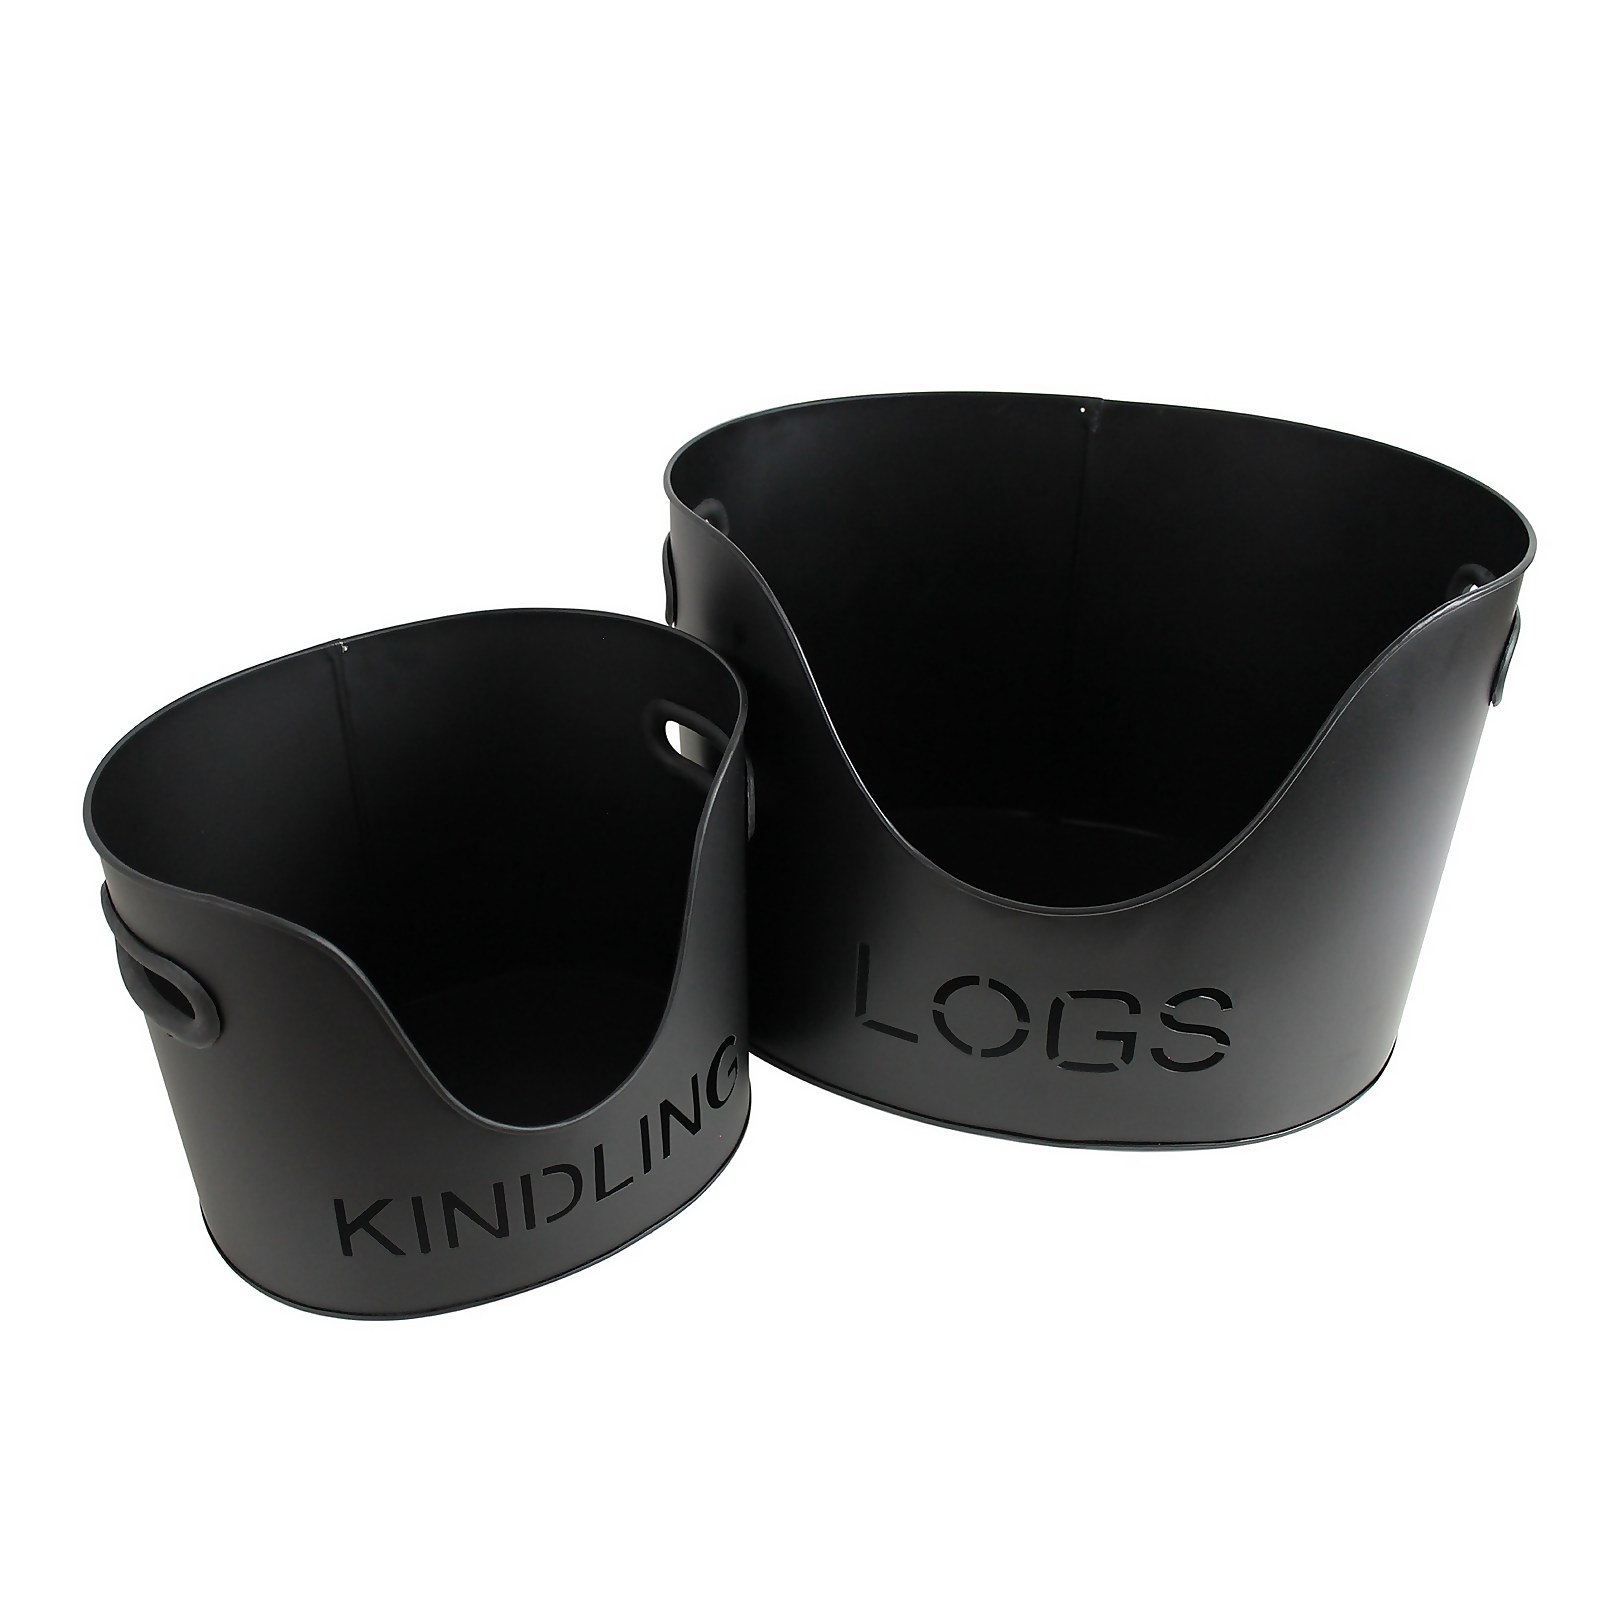 Photo of Log & Kindling Bucket Set - Black